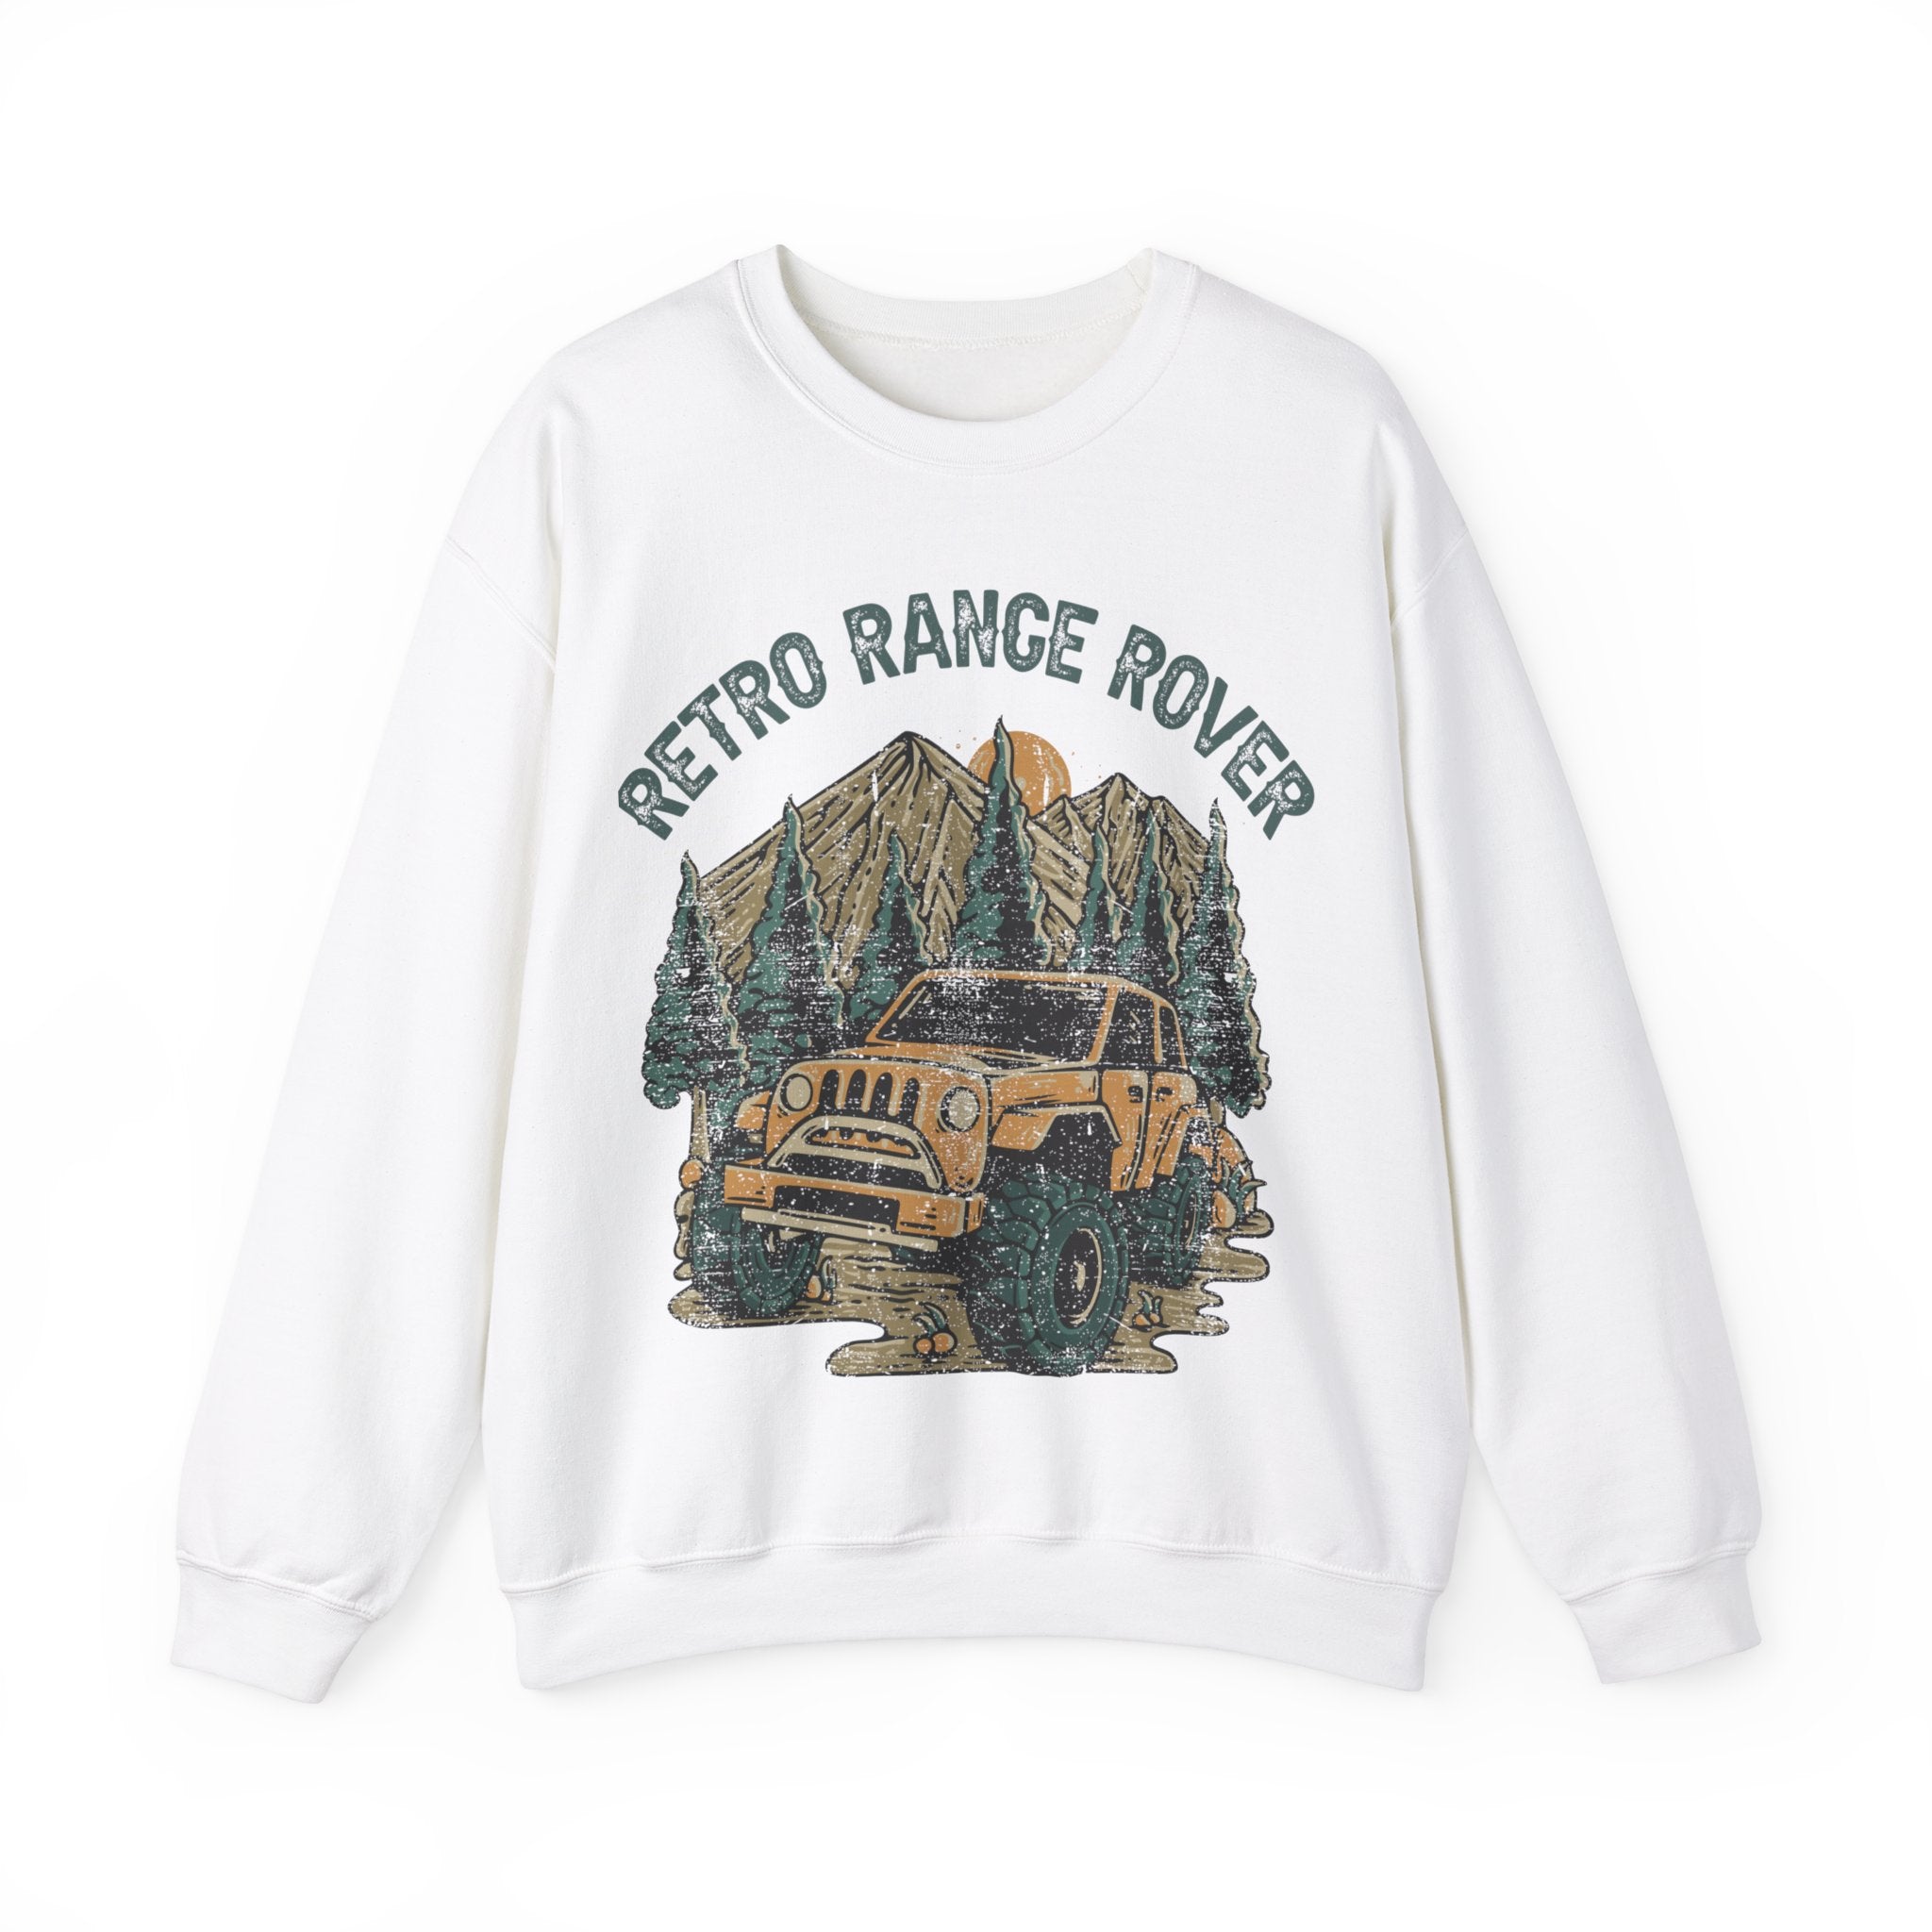 Women's "Retro Range Rover" Vintage Sweatshirt